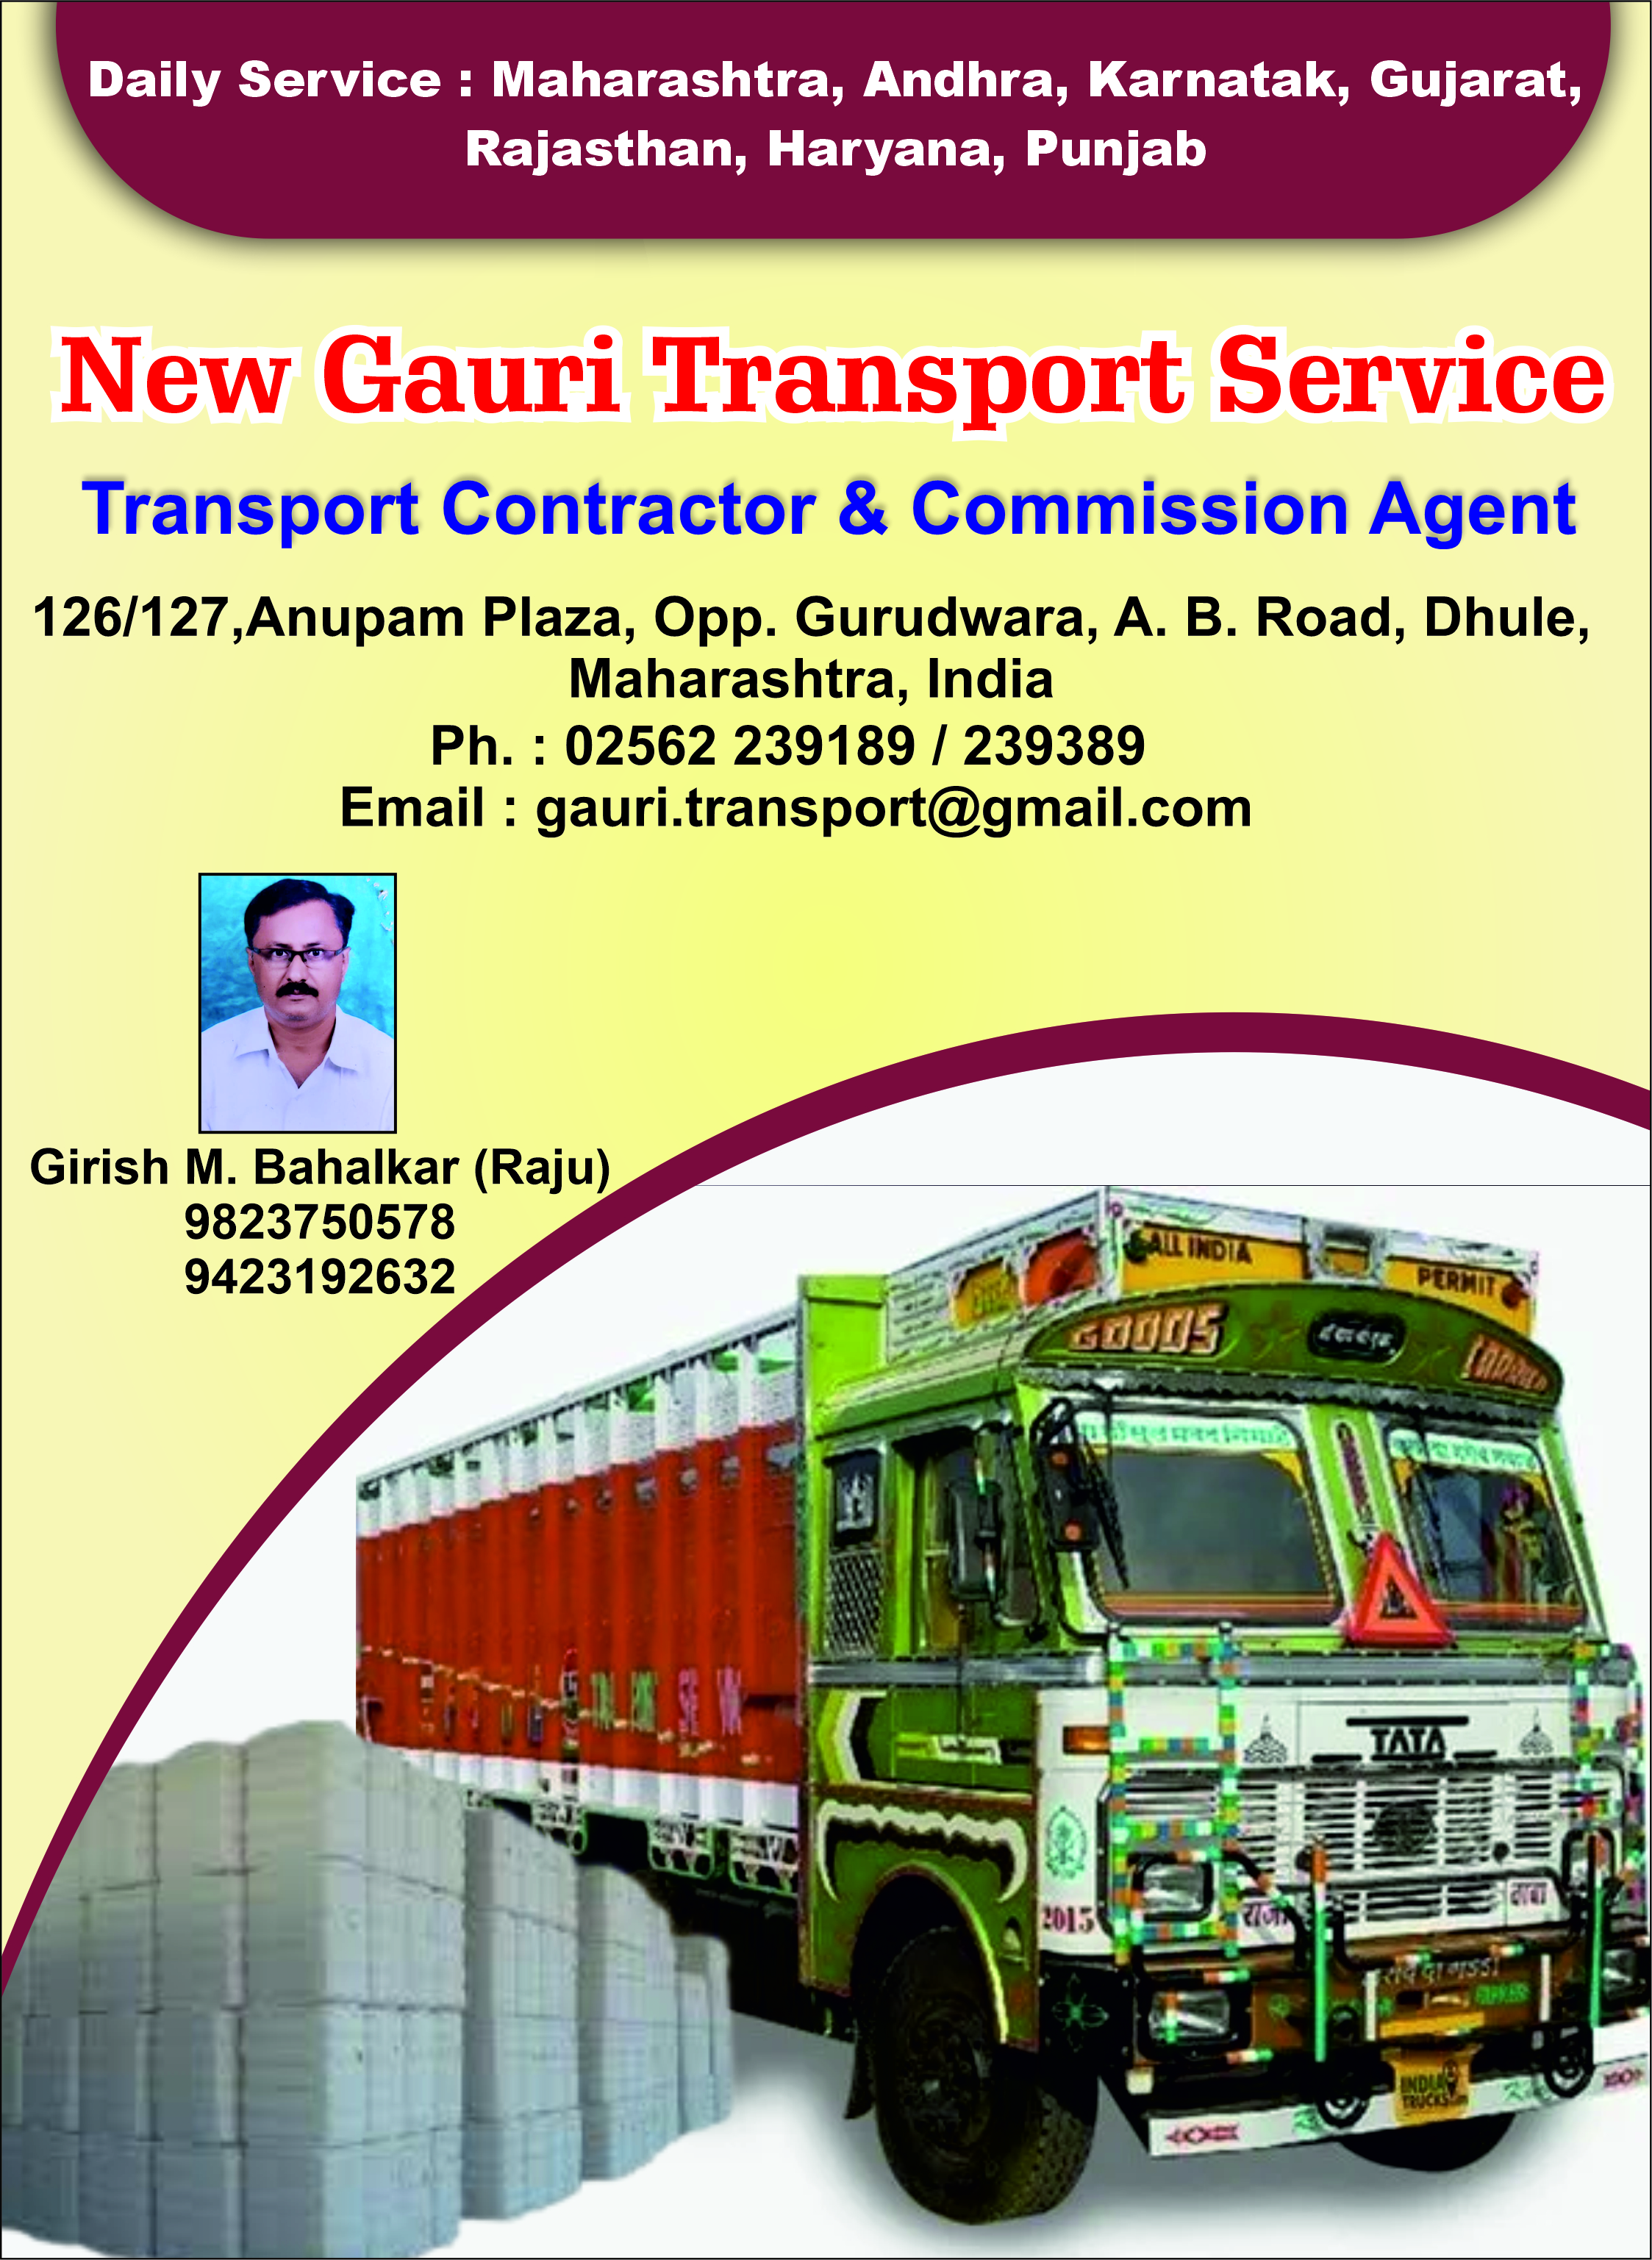 New Gauri Transport Service